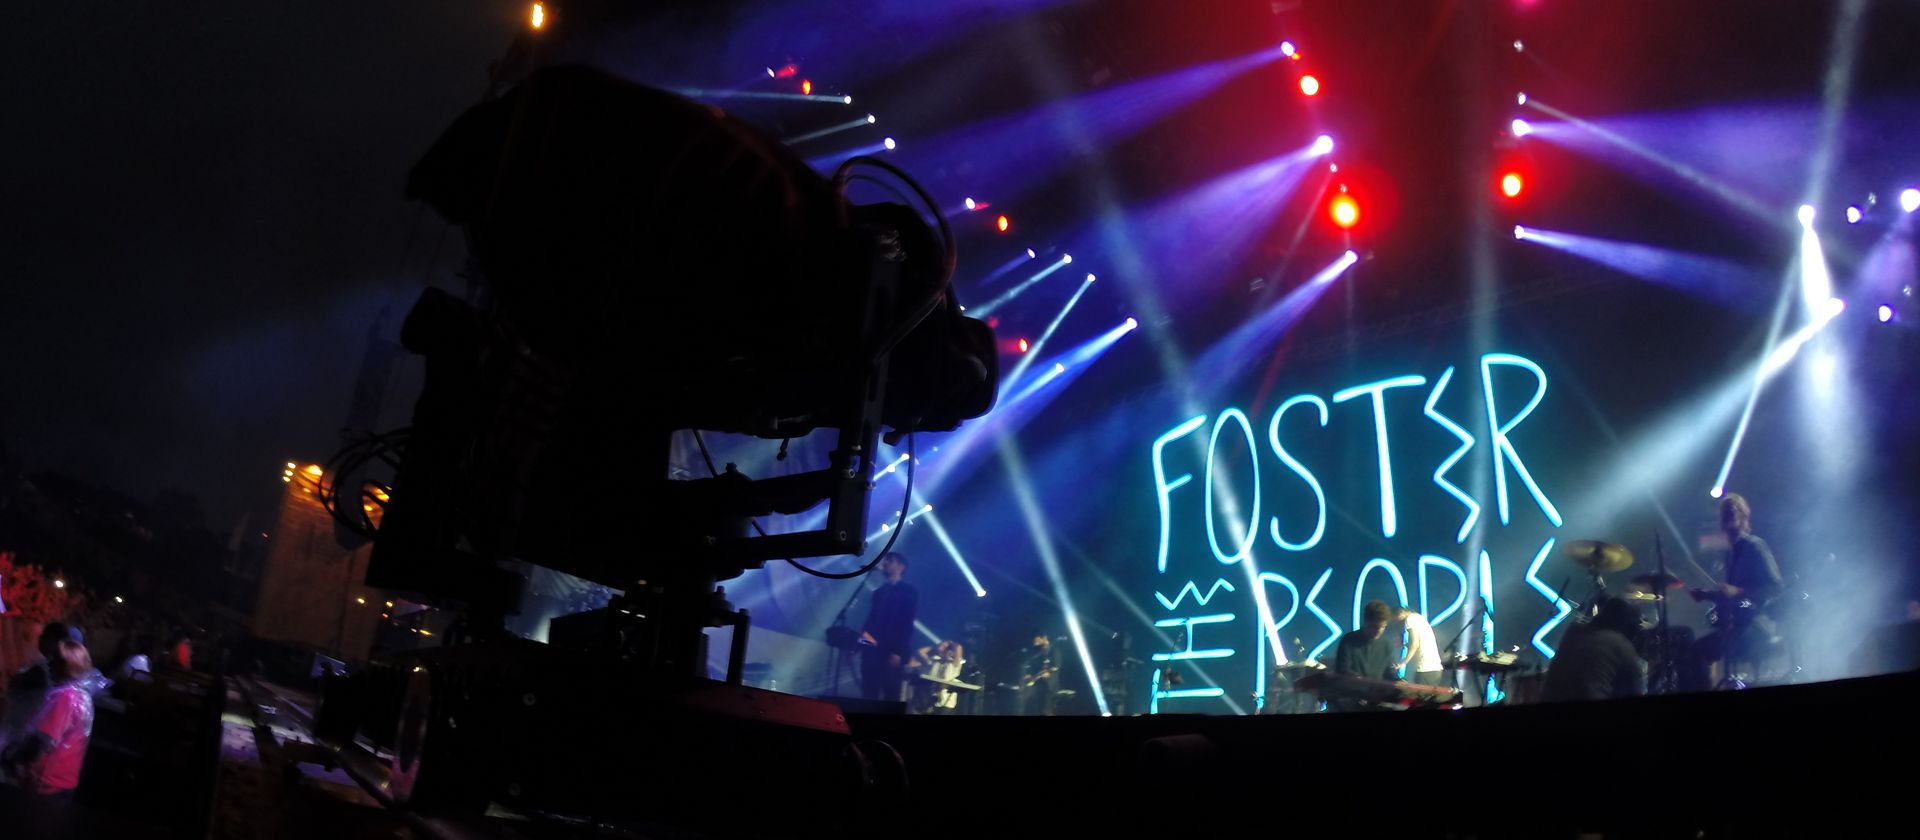 Dolly motorizado no show de Foster the People no Lollapalooza 2015